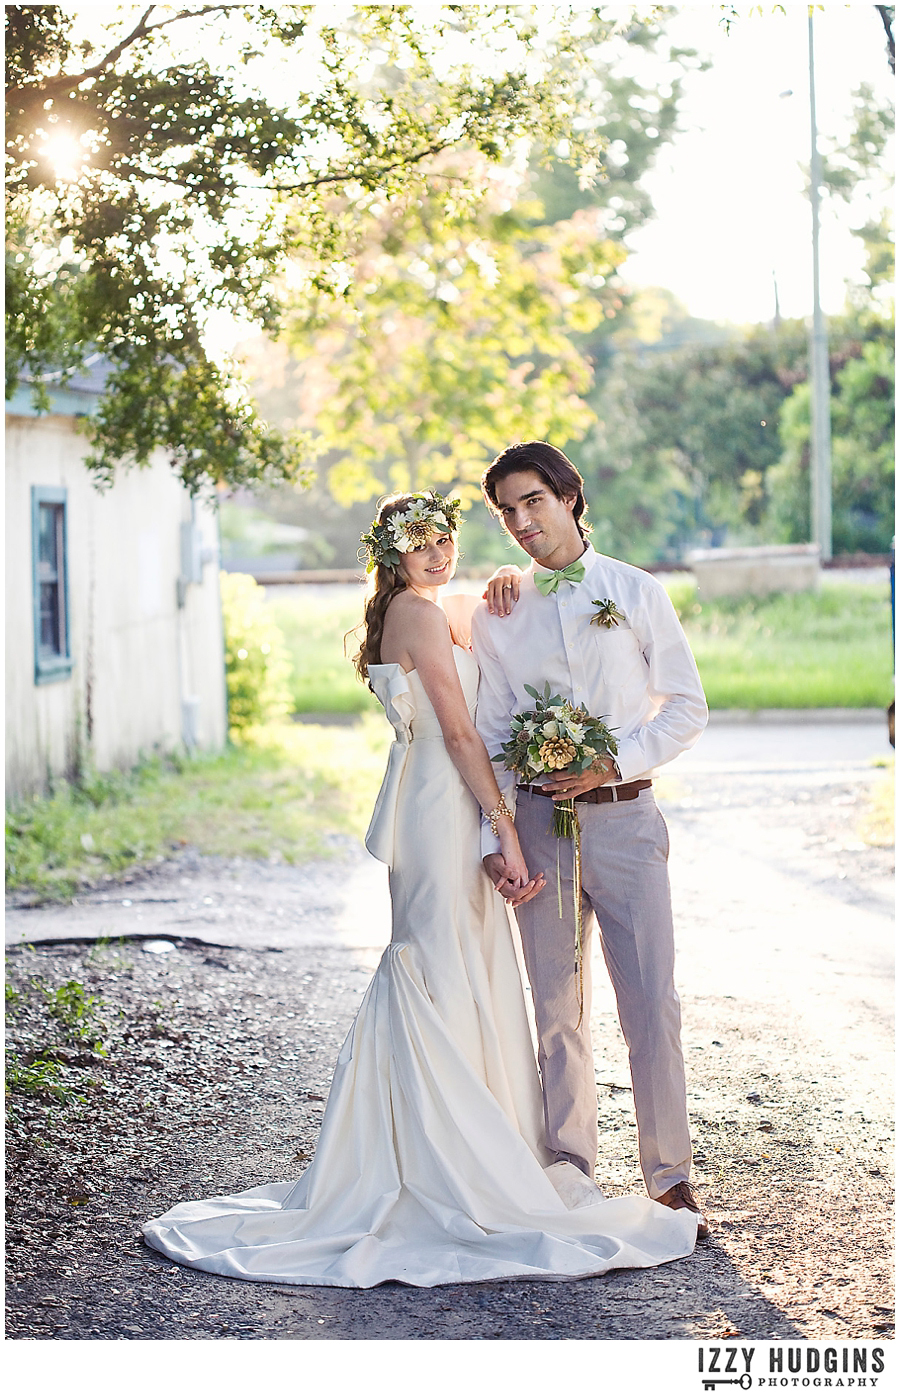 Mint Gold Sparkly Wedding Inspiration Savannah Athens Atlanta Photographer